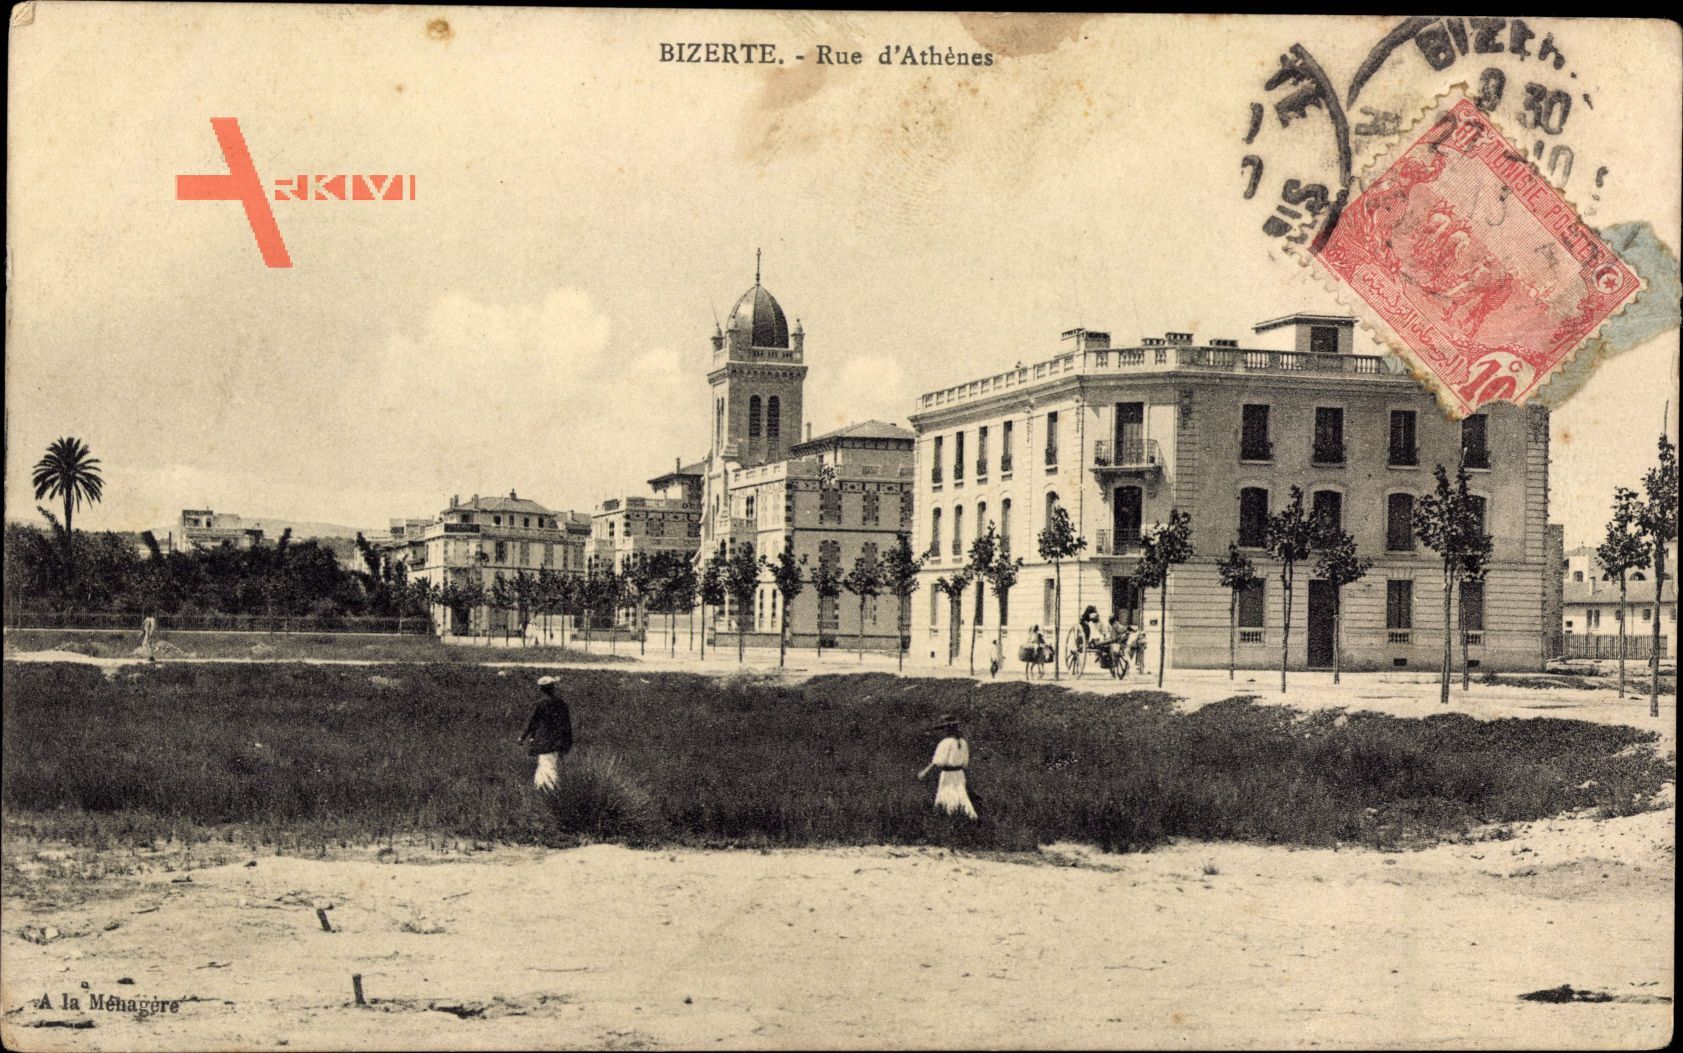 Bizerte Tunesien, Rue d'Athenes, Gebäude, Grube, Passanten, Bäume